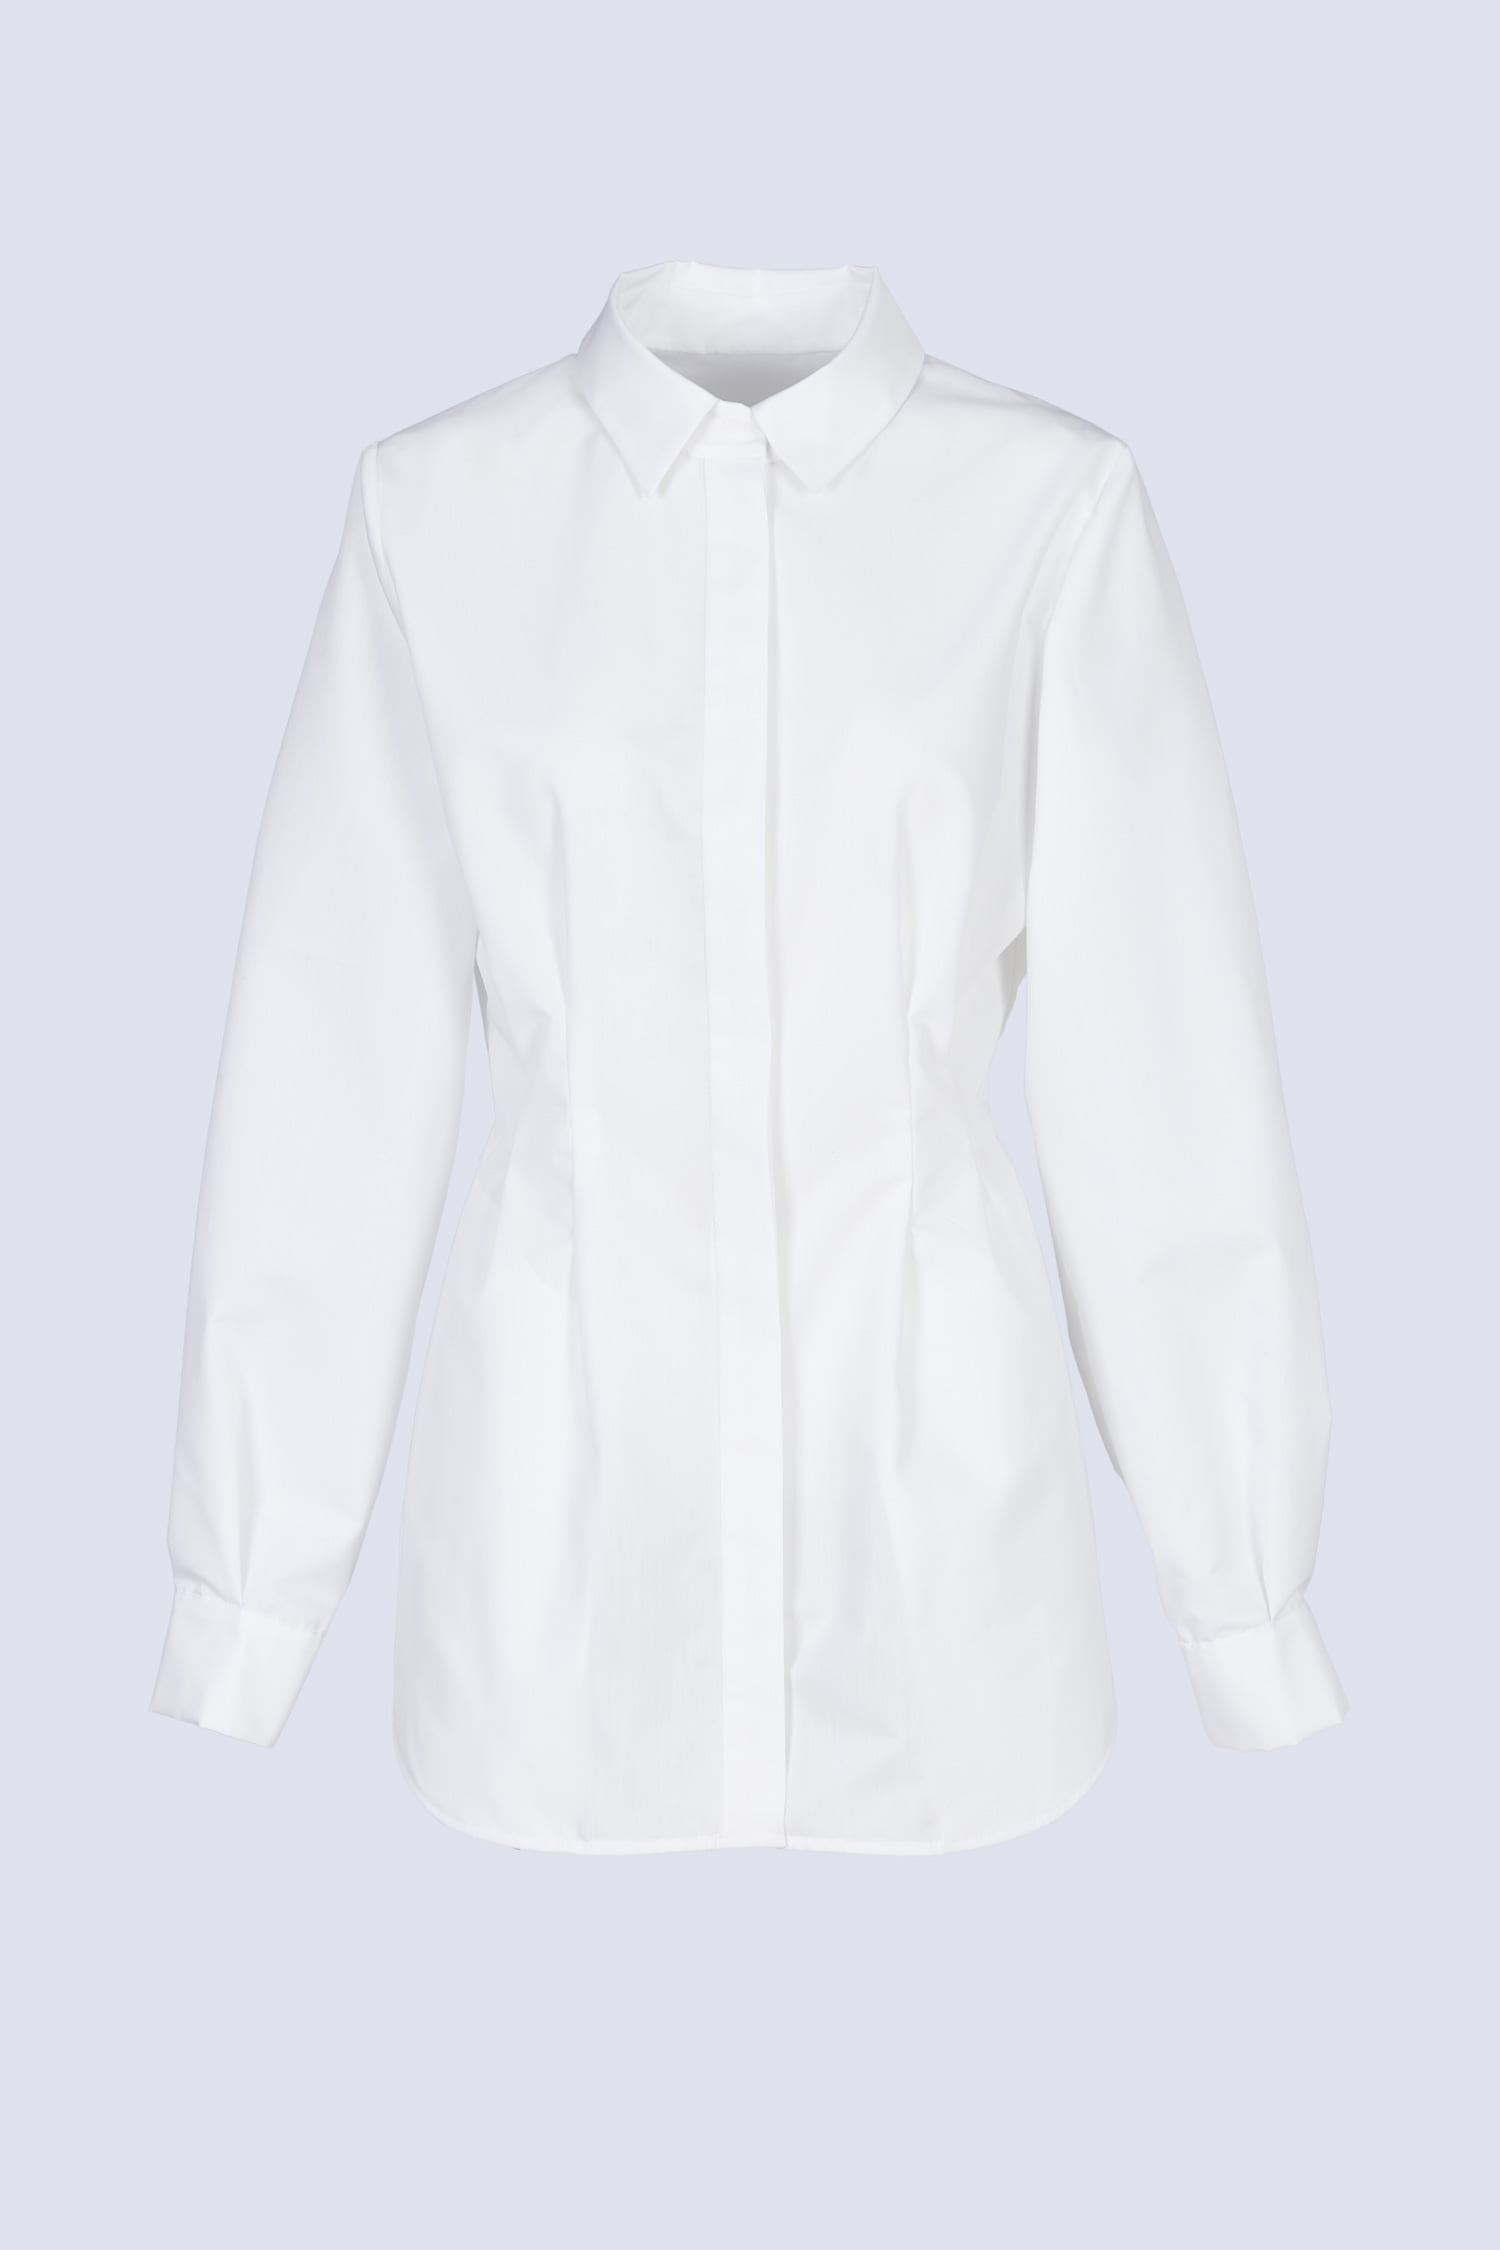 Acephala-SS22-packshot-white-gathered-shirt